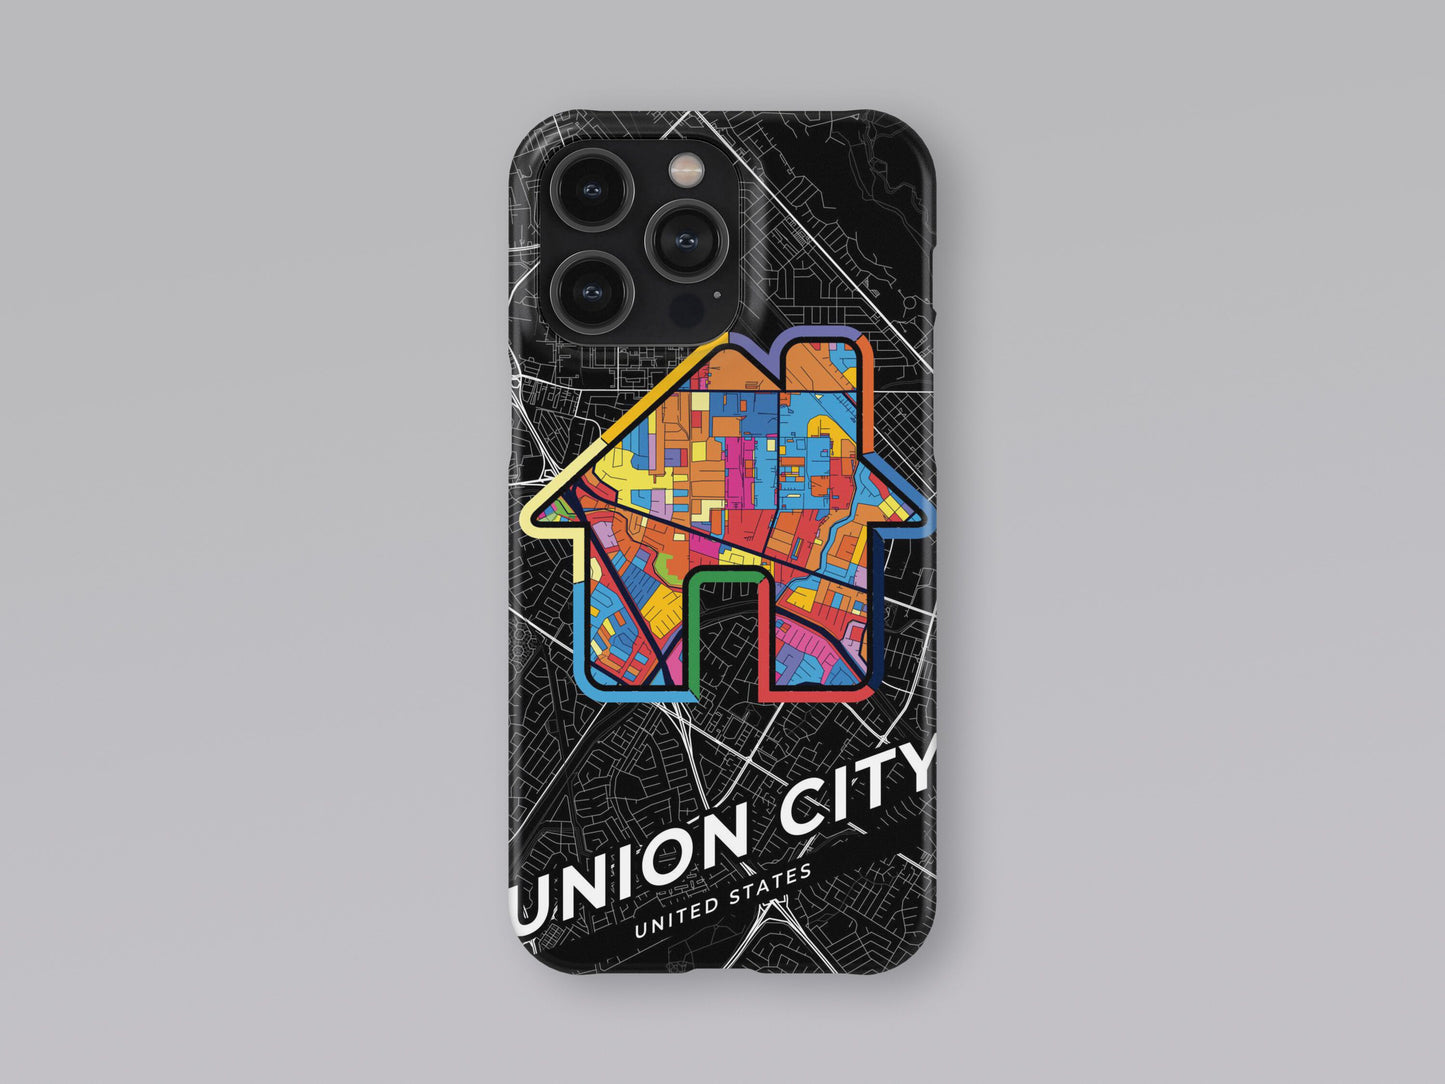 Union City California slim phone case with colorful icon 3